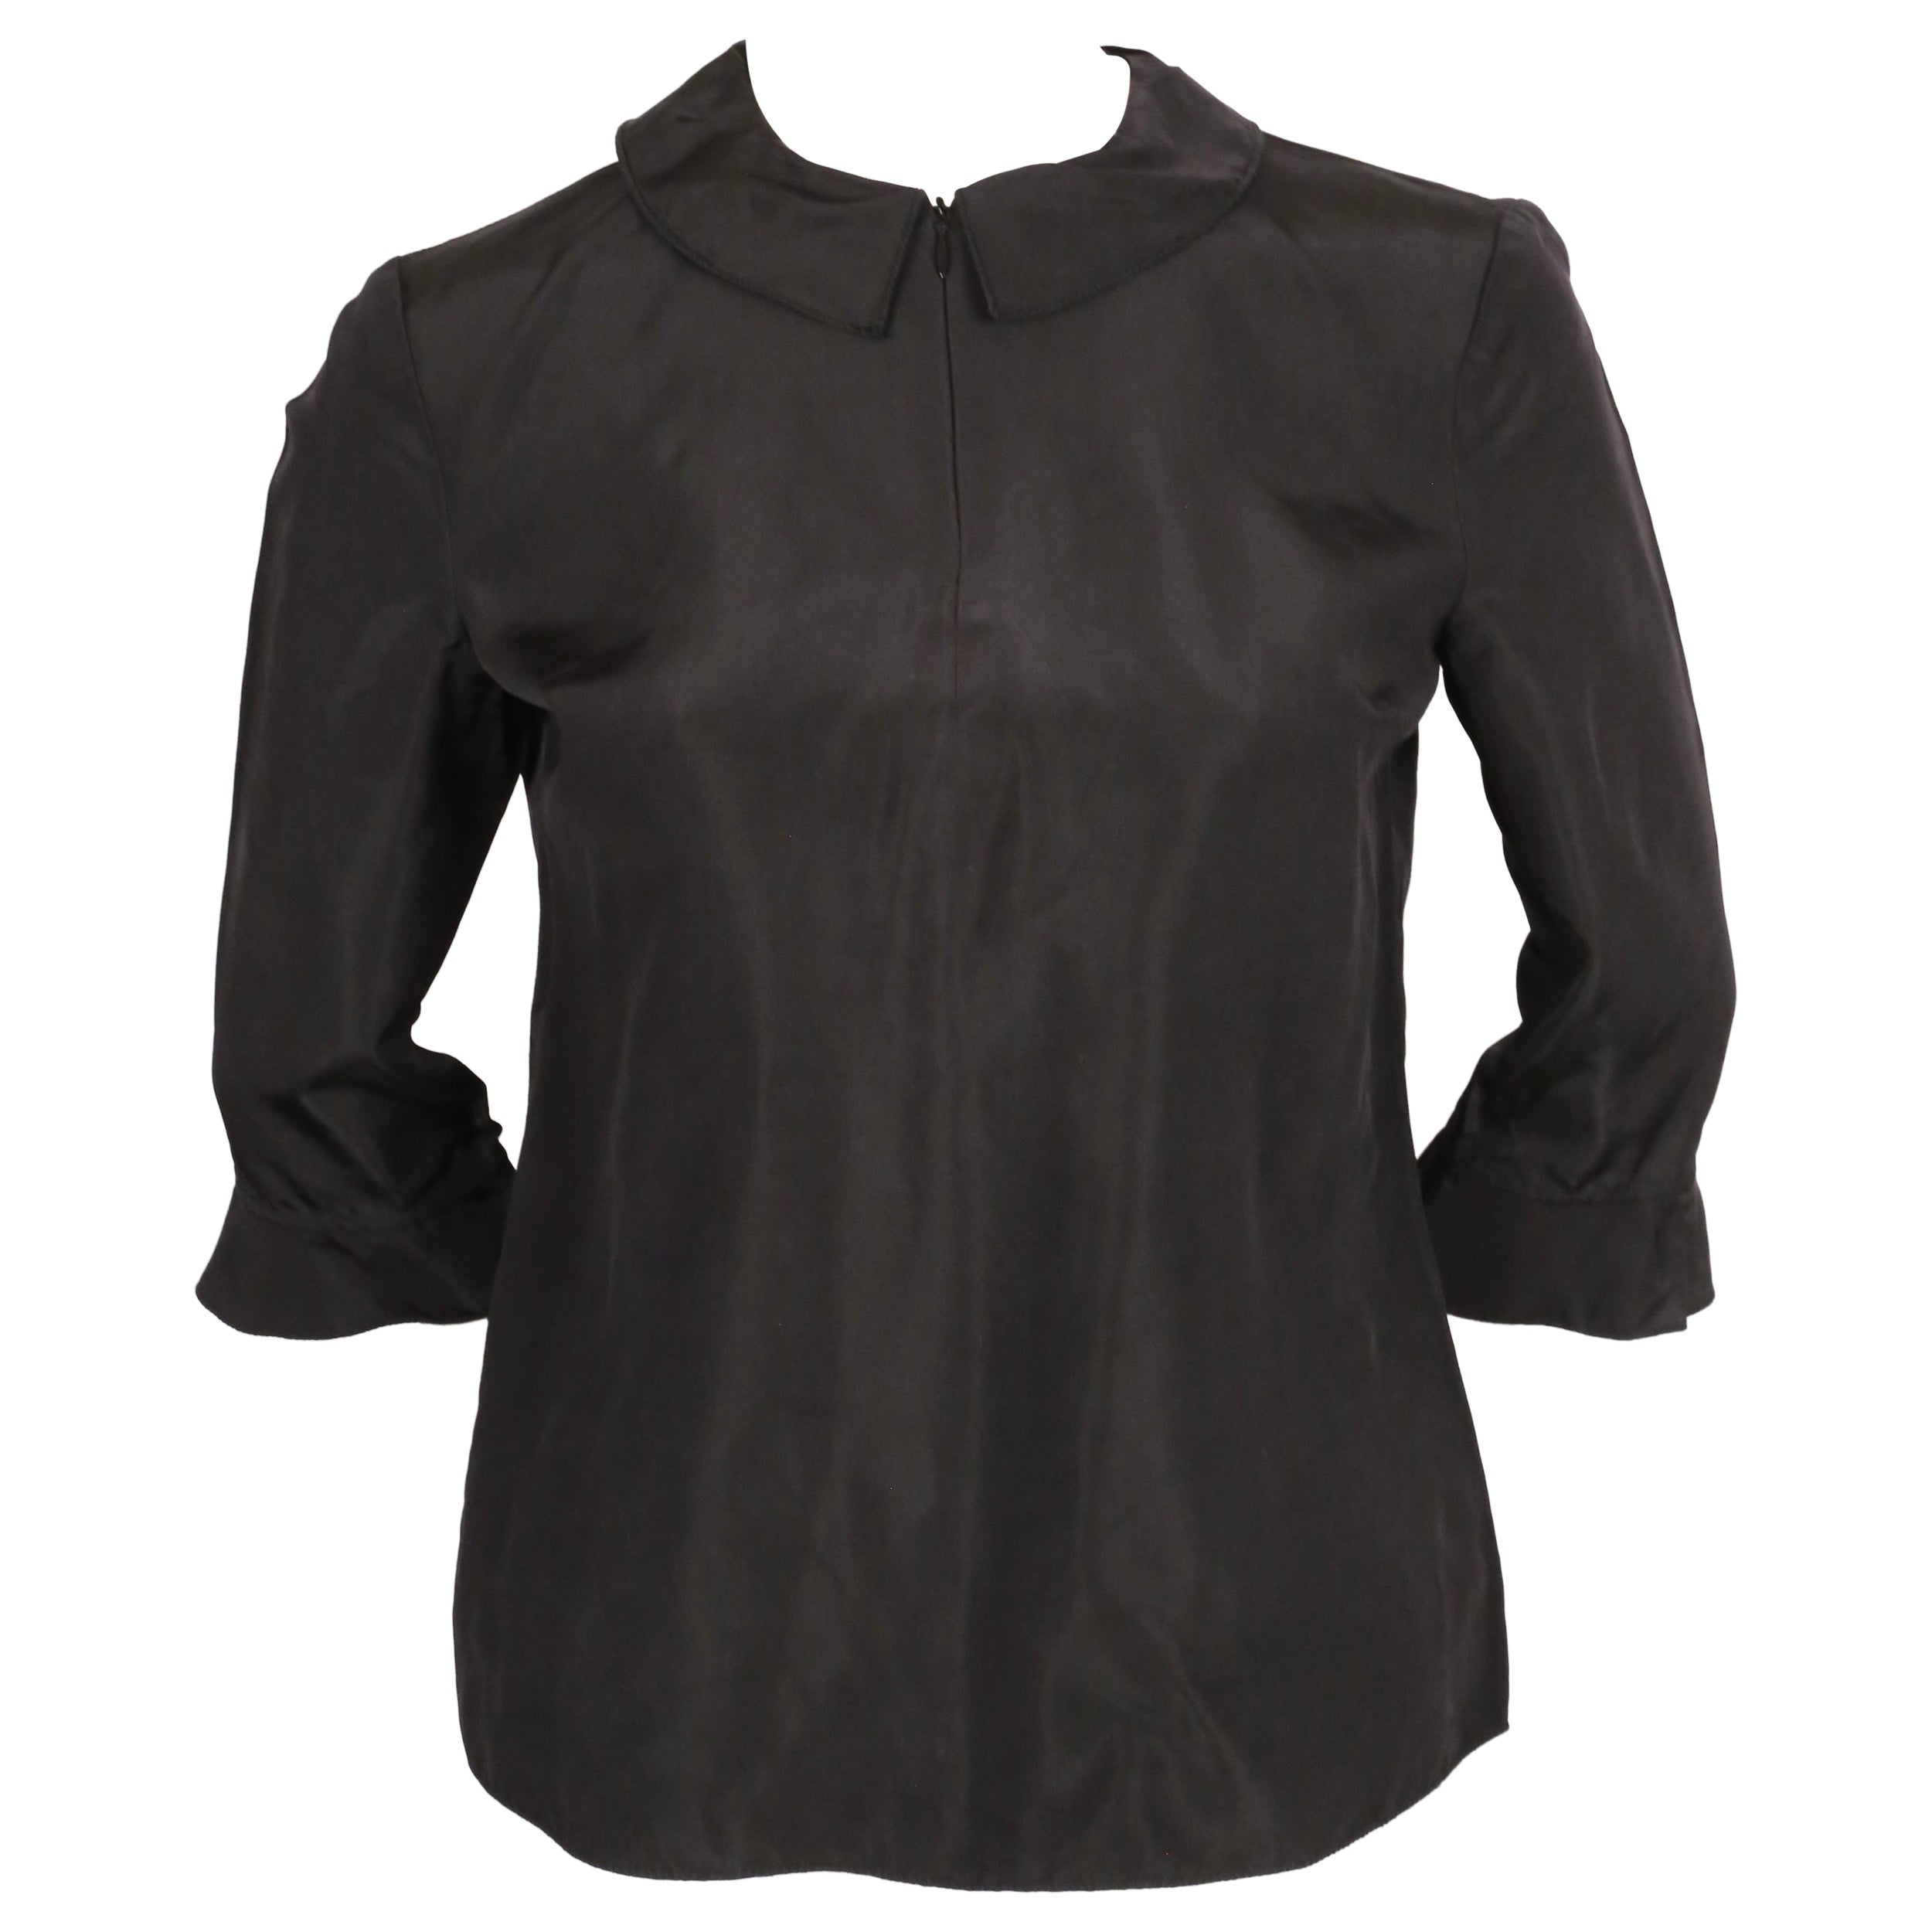 1998 MIU MIU minimalist black runway shirt with ruffles For Sale